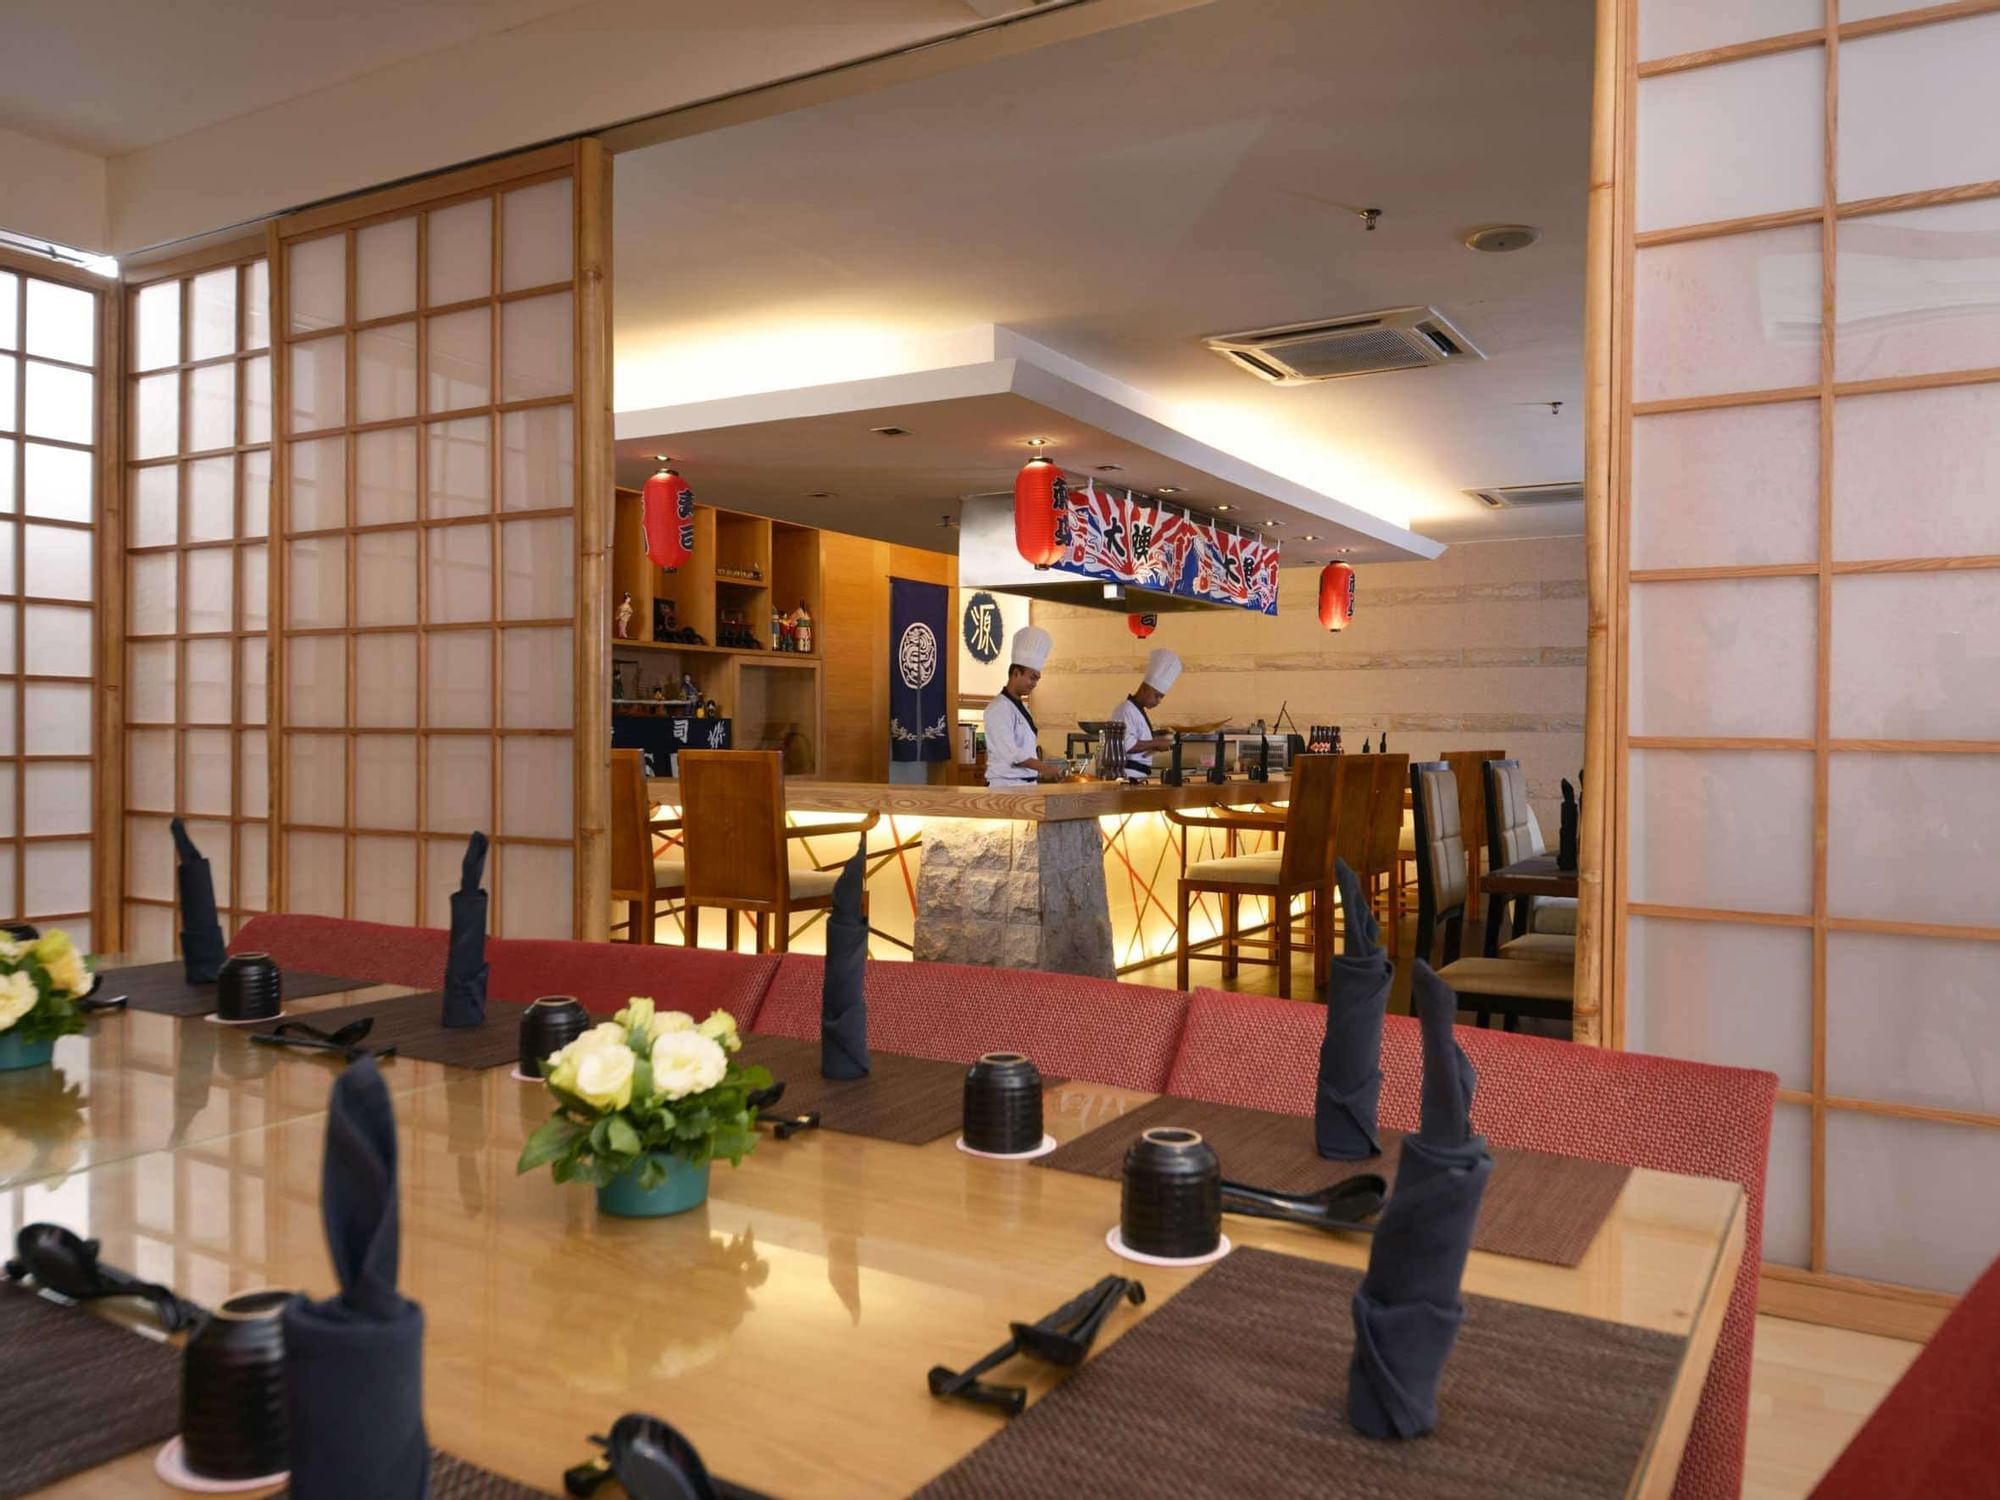 UMI Japanese Restaurant view 1